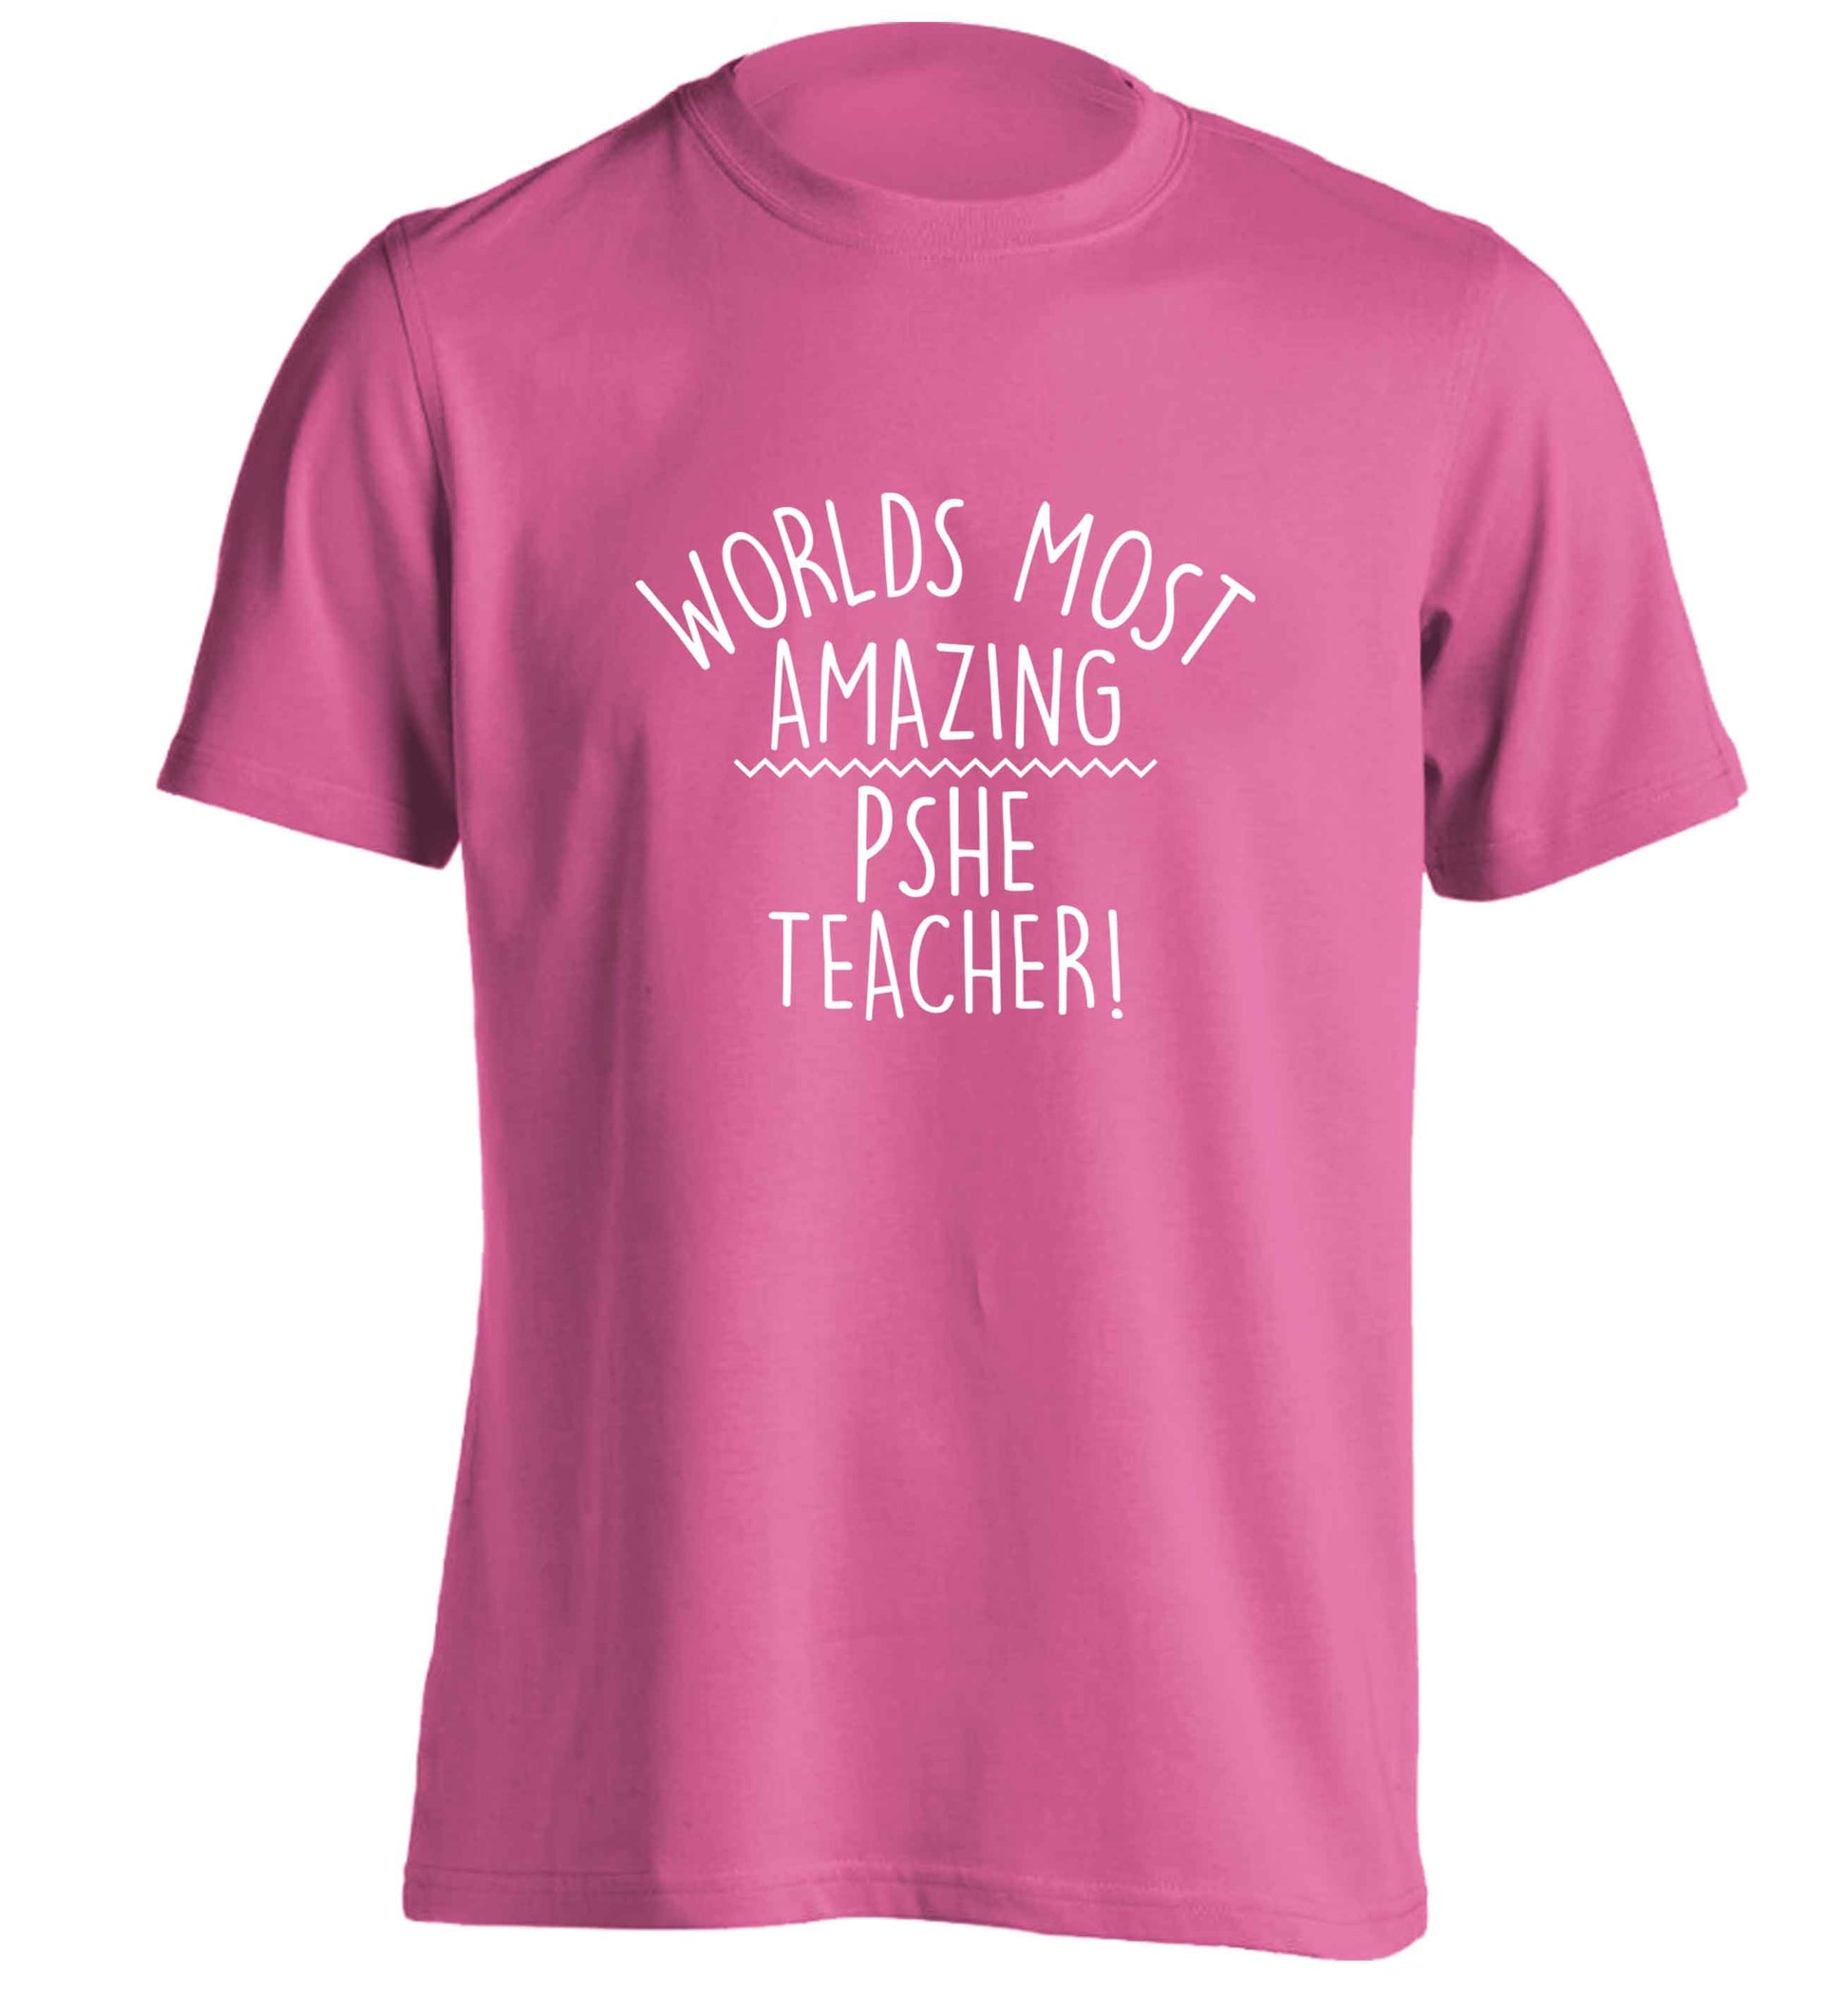 Worlds most amazing PHSE teacher adults unisex pink Tshirt 2XL